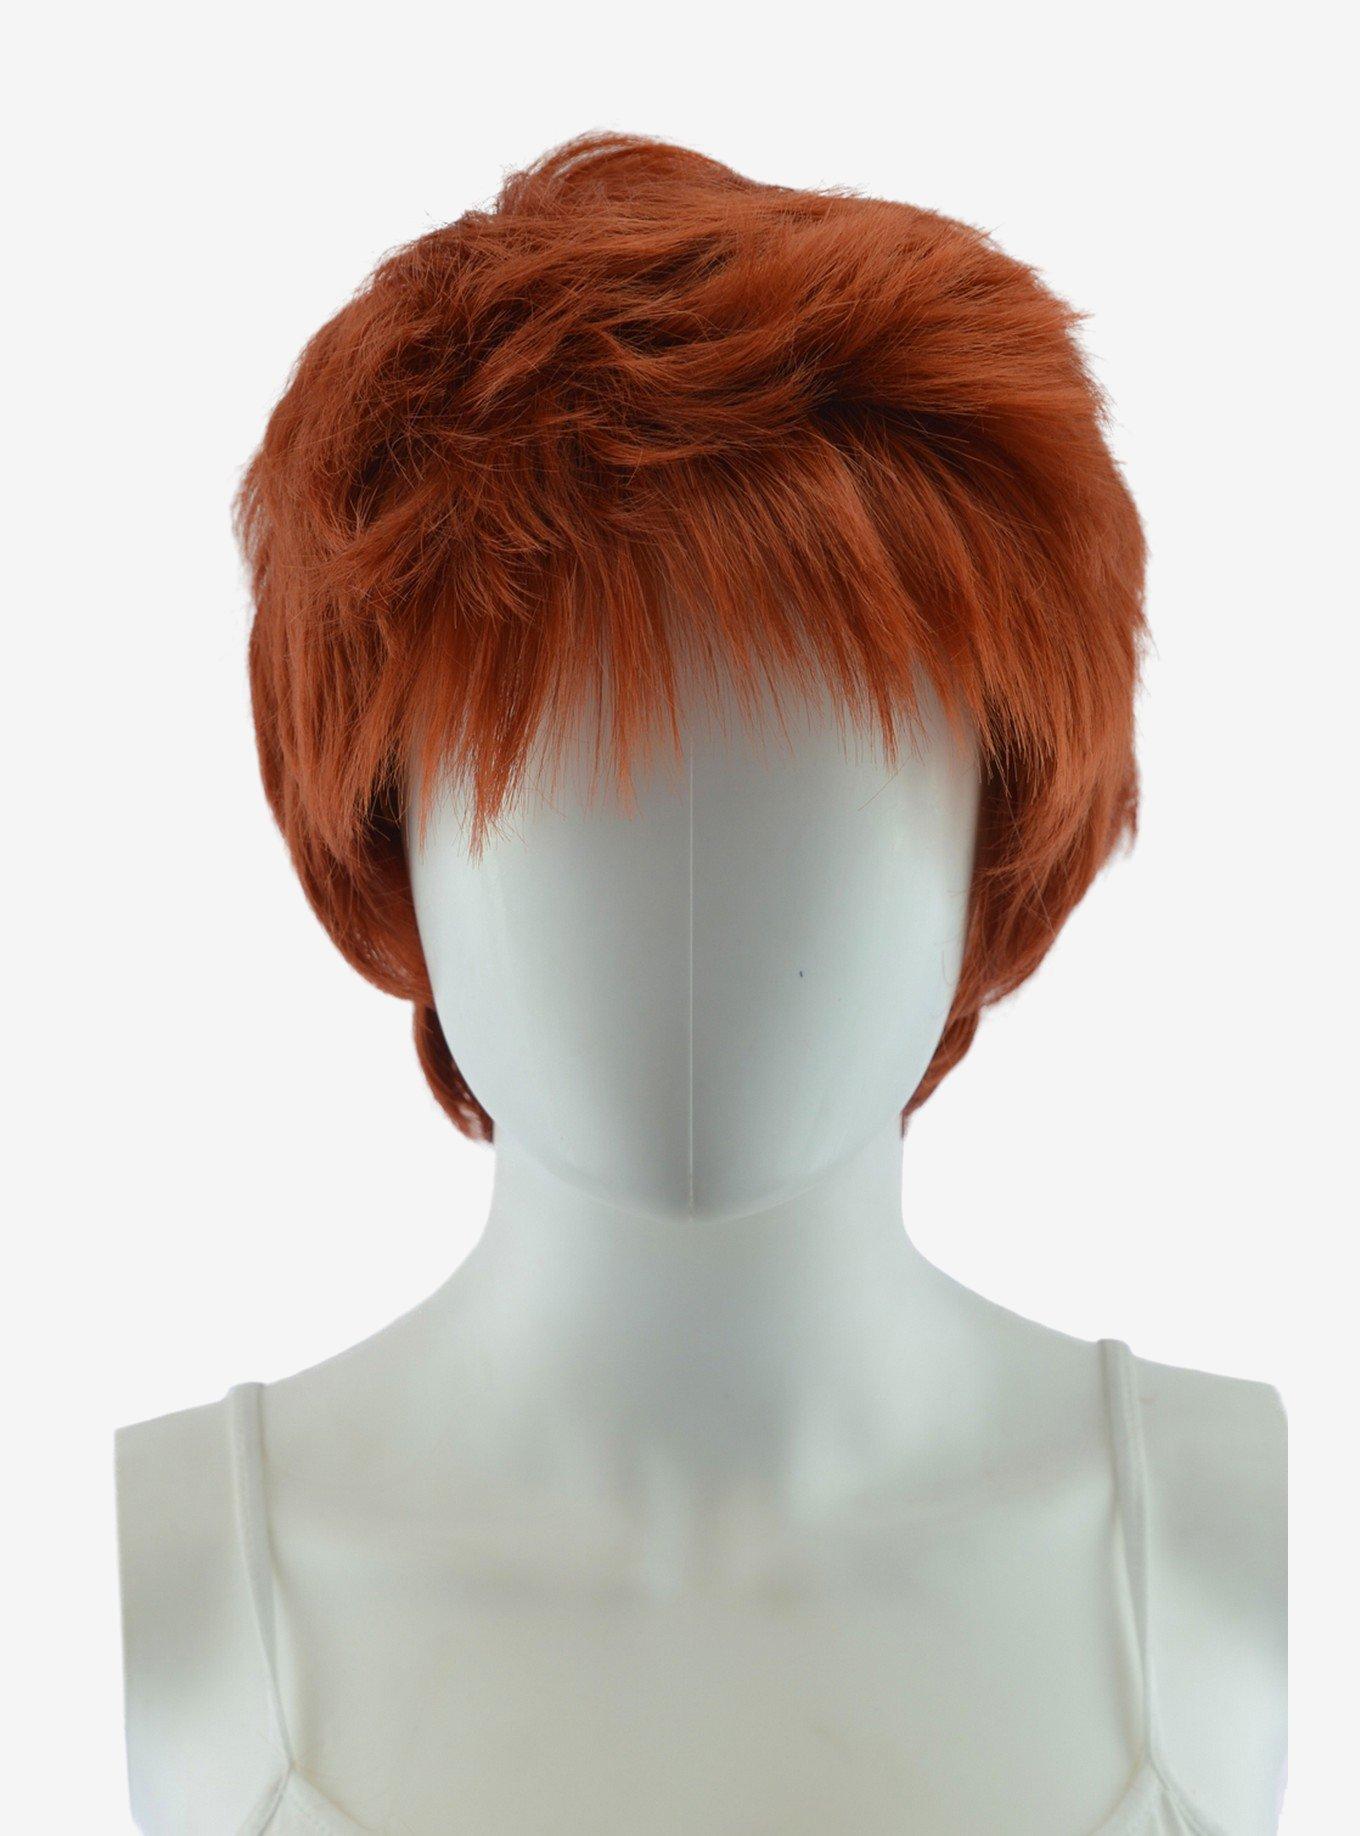 Epic Cosplay Hermes Copper Red Pixie Hair Wig, , hi-res